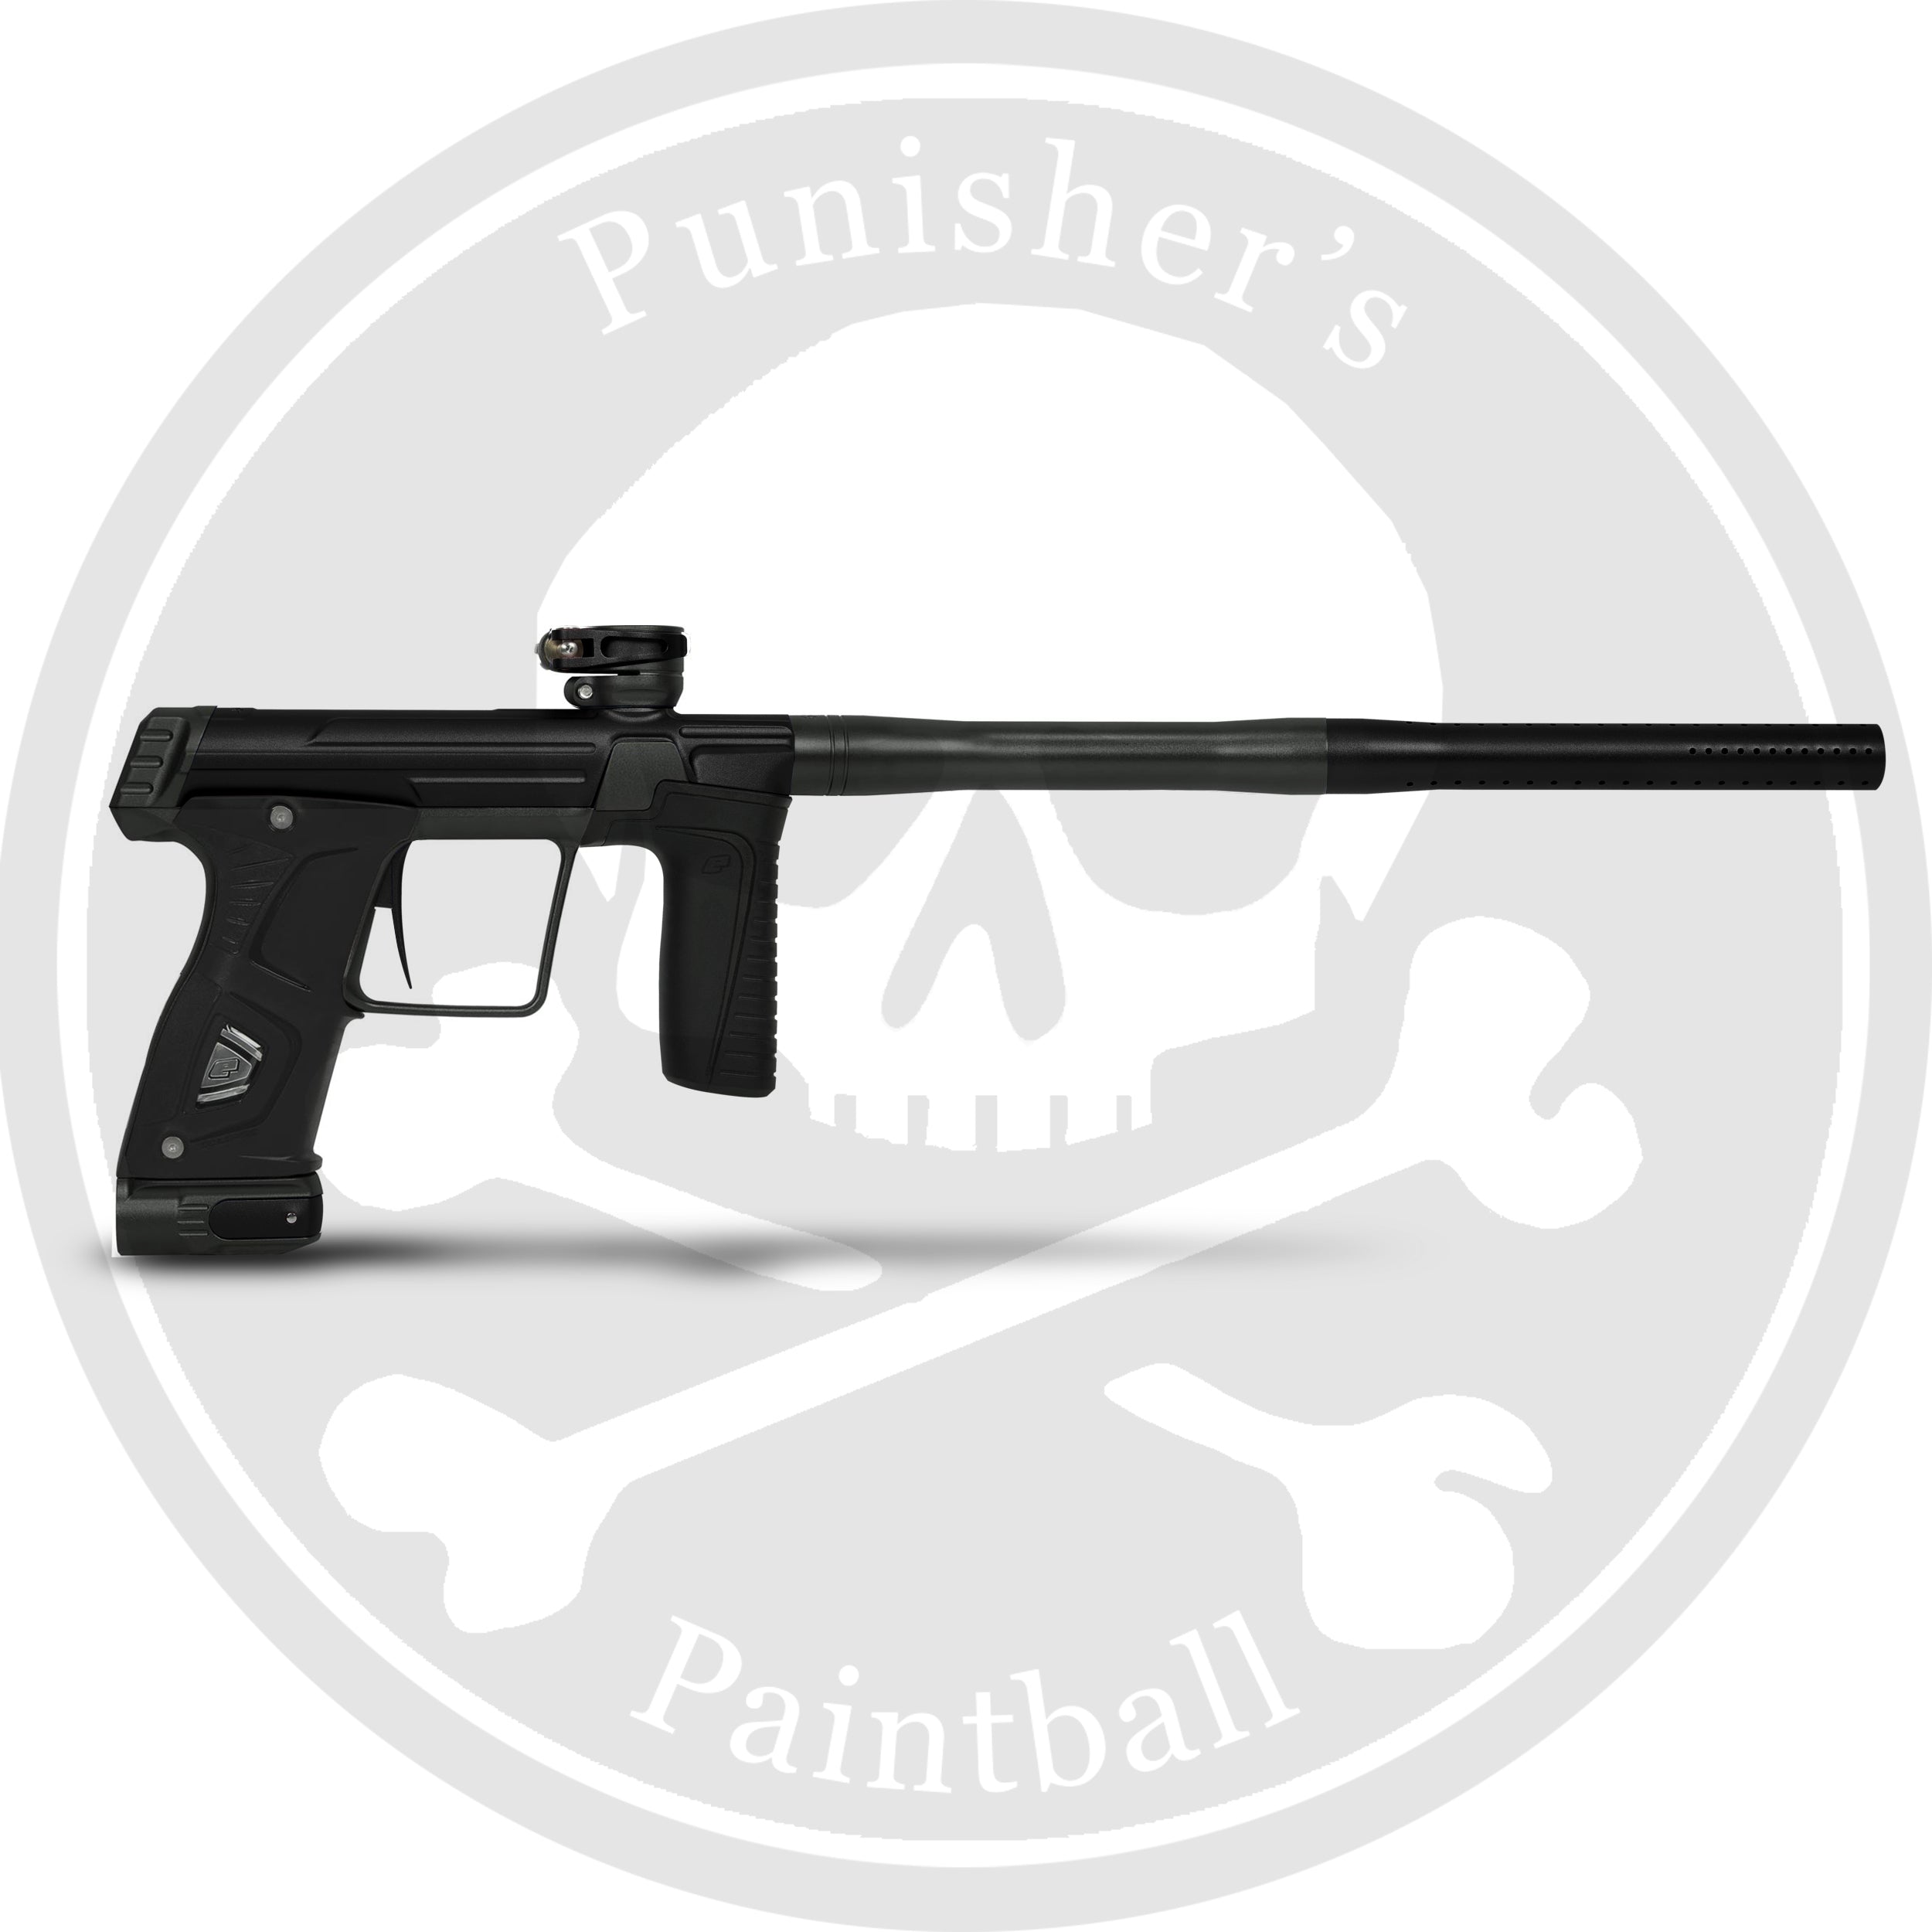 Planet Eclipse Gtek 170R Paintball Gun - Black/Grey